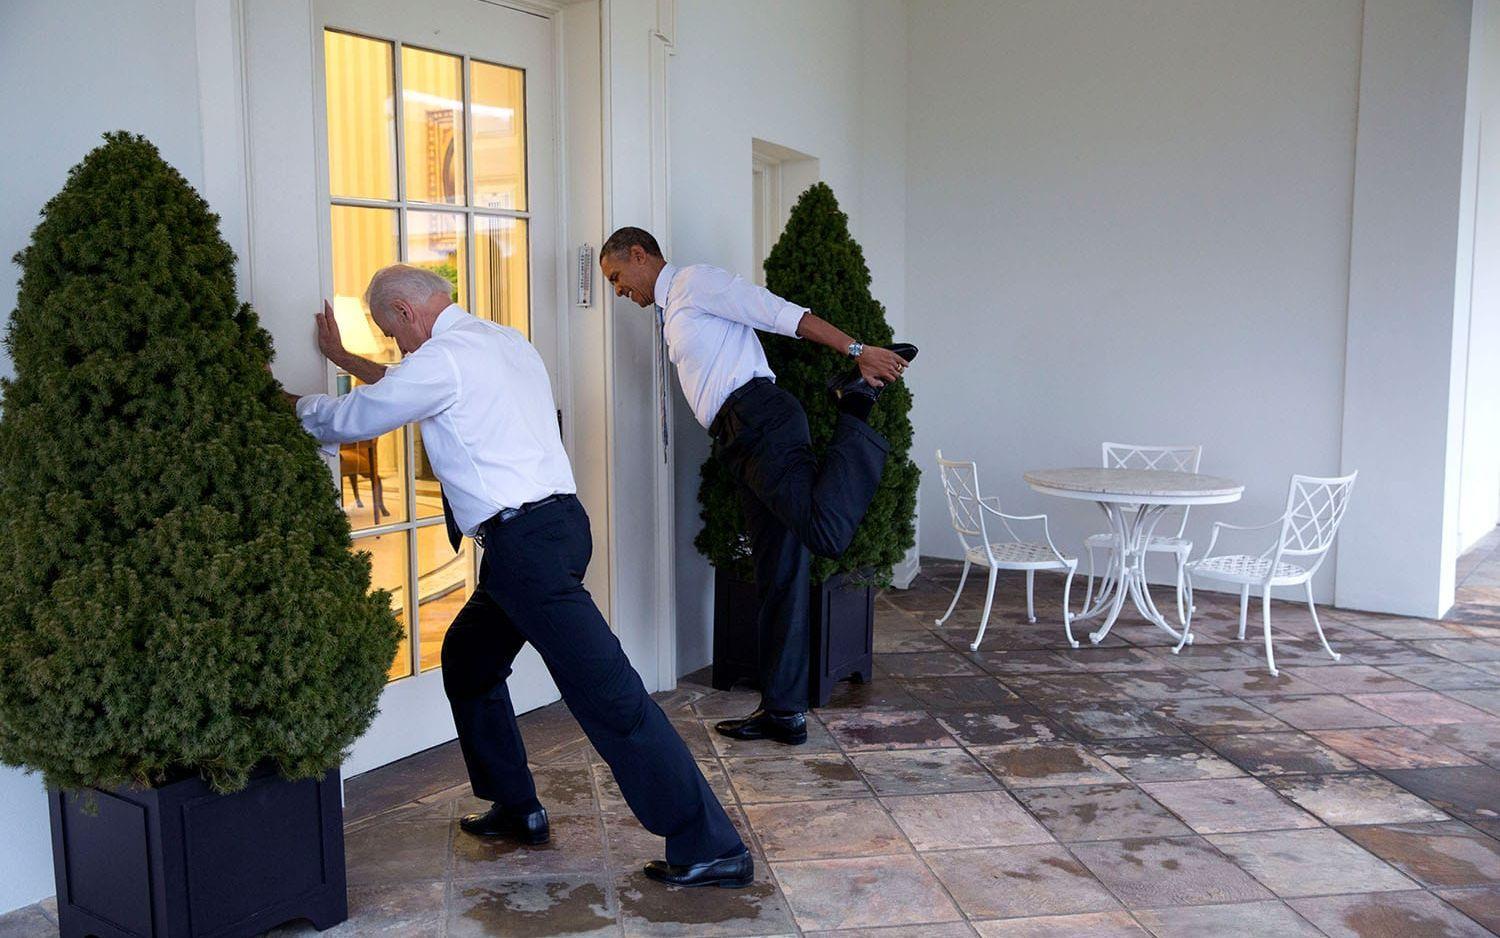 21 februari, 2014: Barack Obama och Joe Biden spelar in en film som en del i hälsokampanjen Let's Move. Foto: Pete Souza / Vita Huset